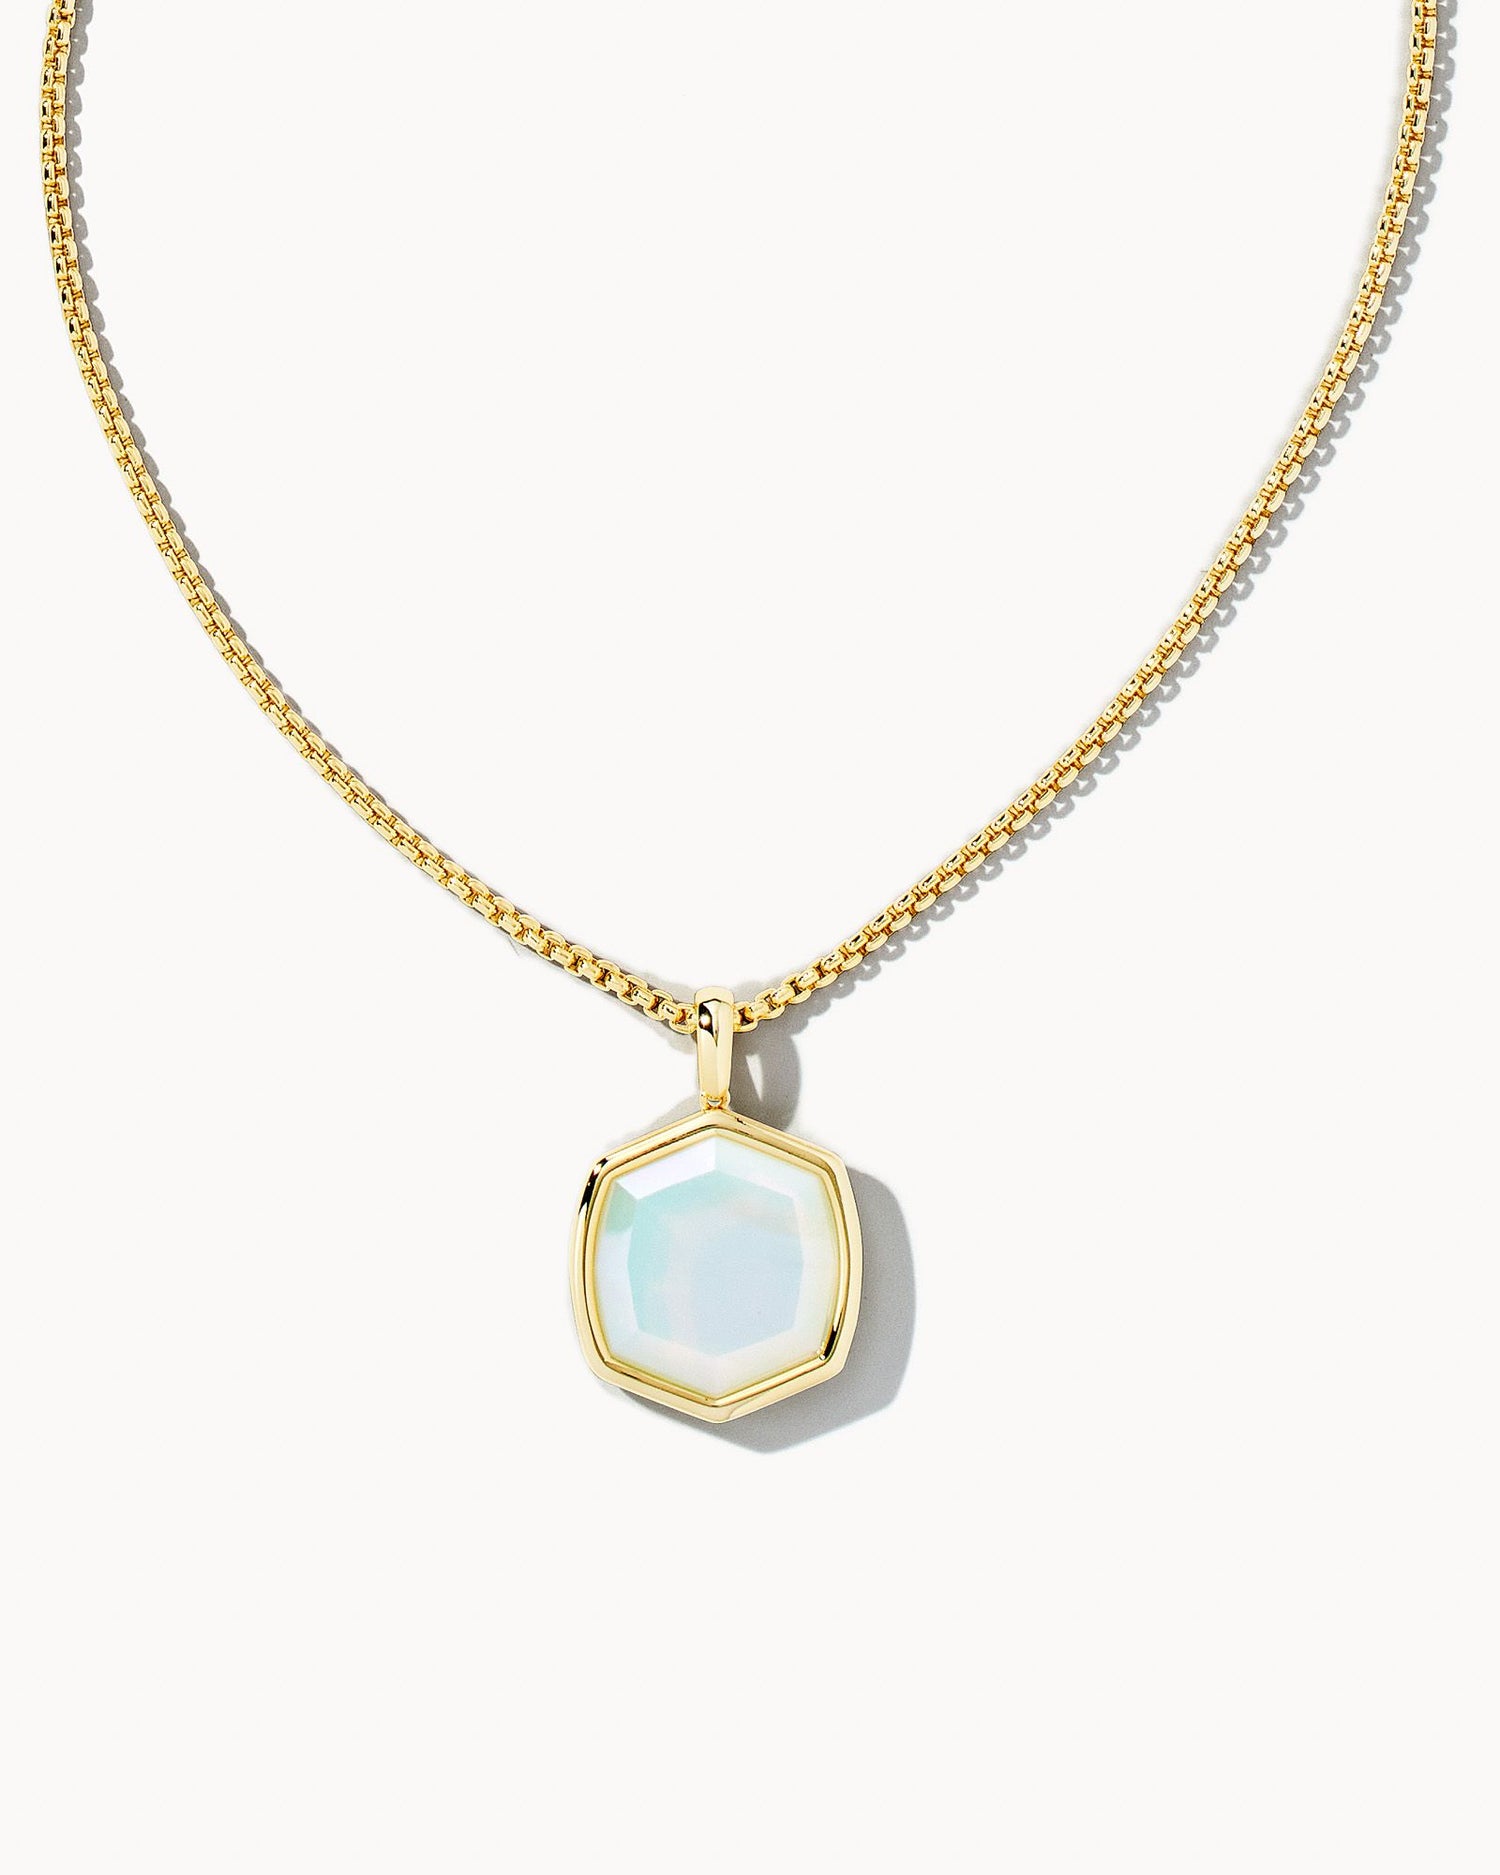 Kendra Scott Inez Gold Long Pendant Necklace in White Pearl: Precious  Accents, Ltd.